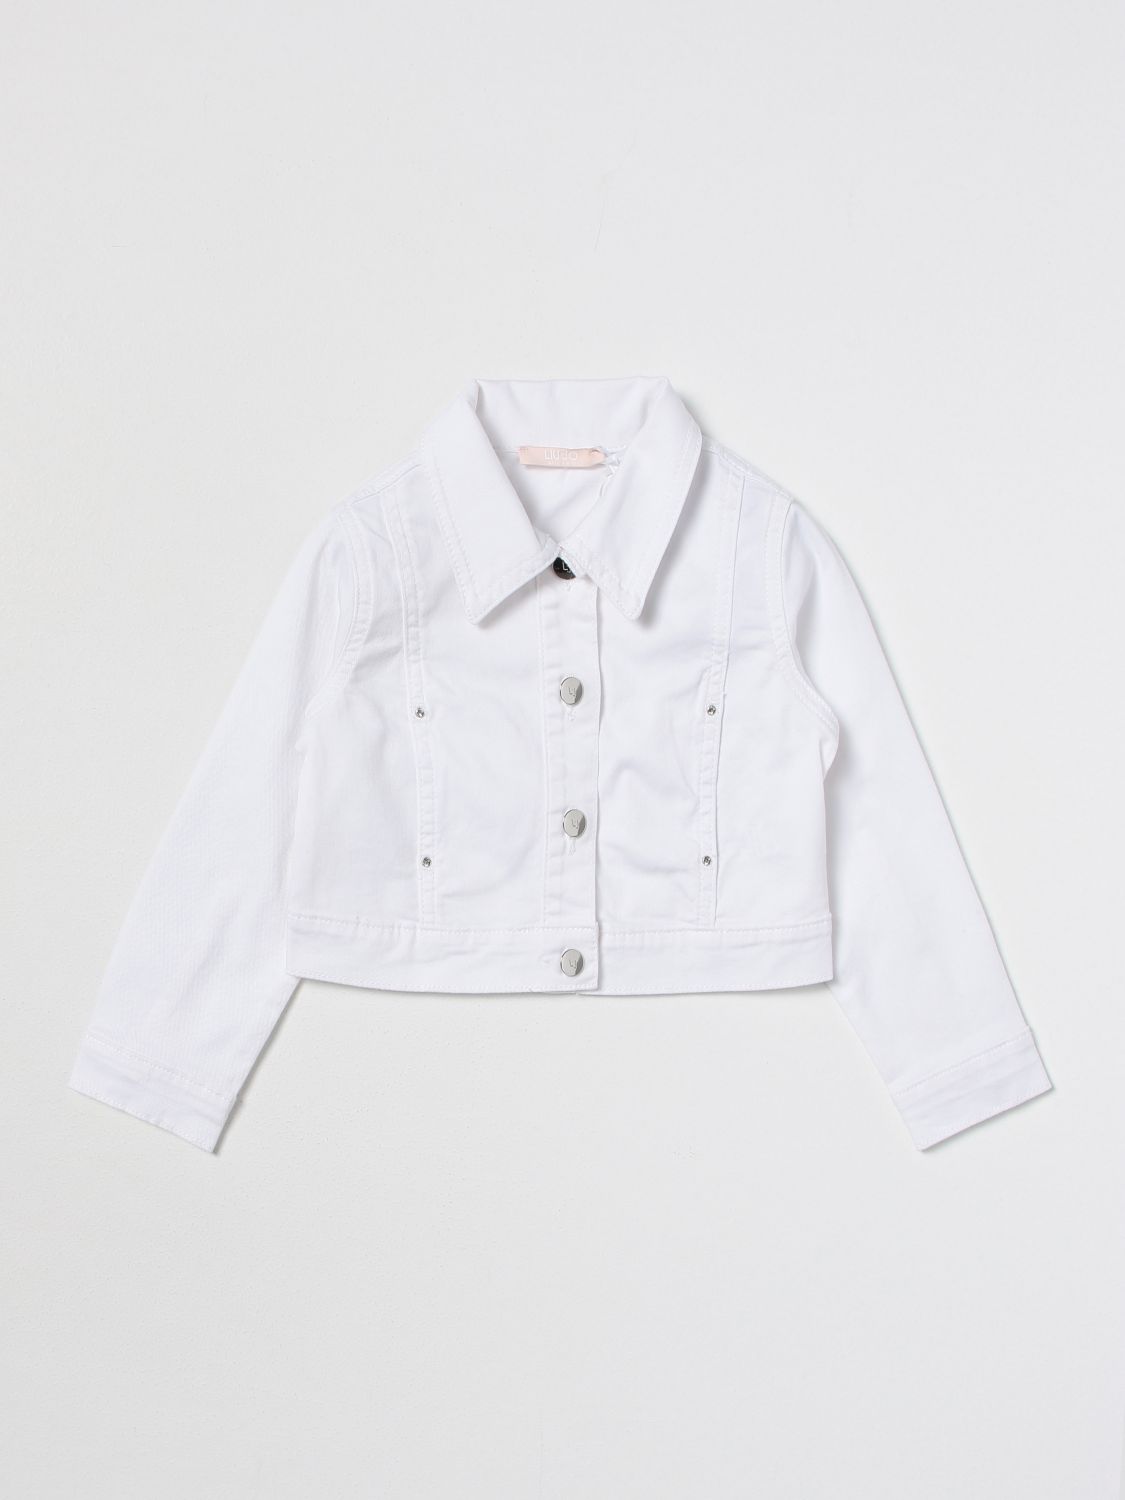 LIU JO KIDS: jacket for girls - White | Liu Jo Kids jacket KA3081T3357 ...